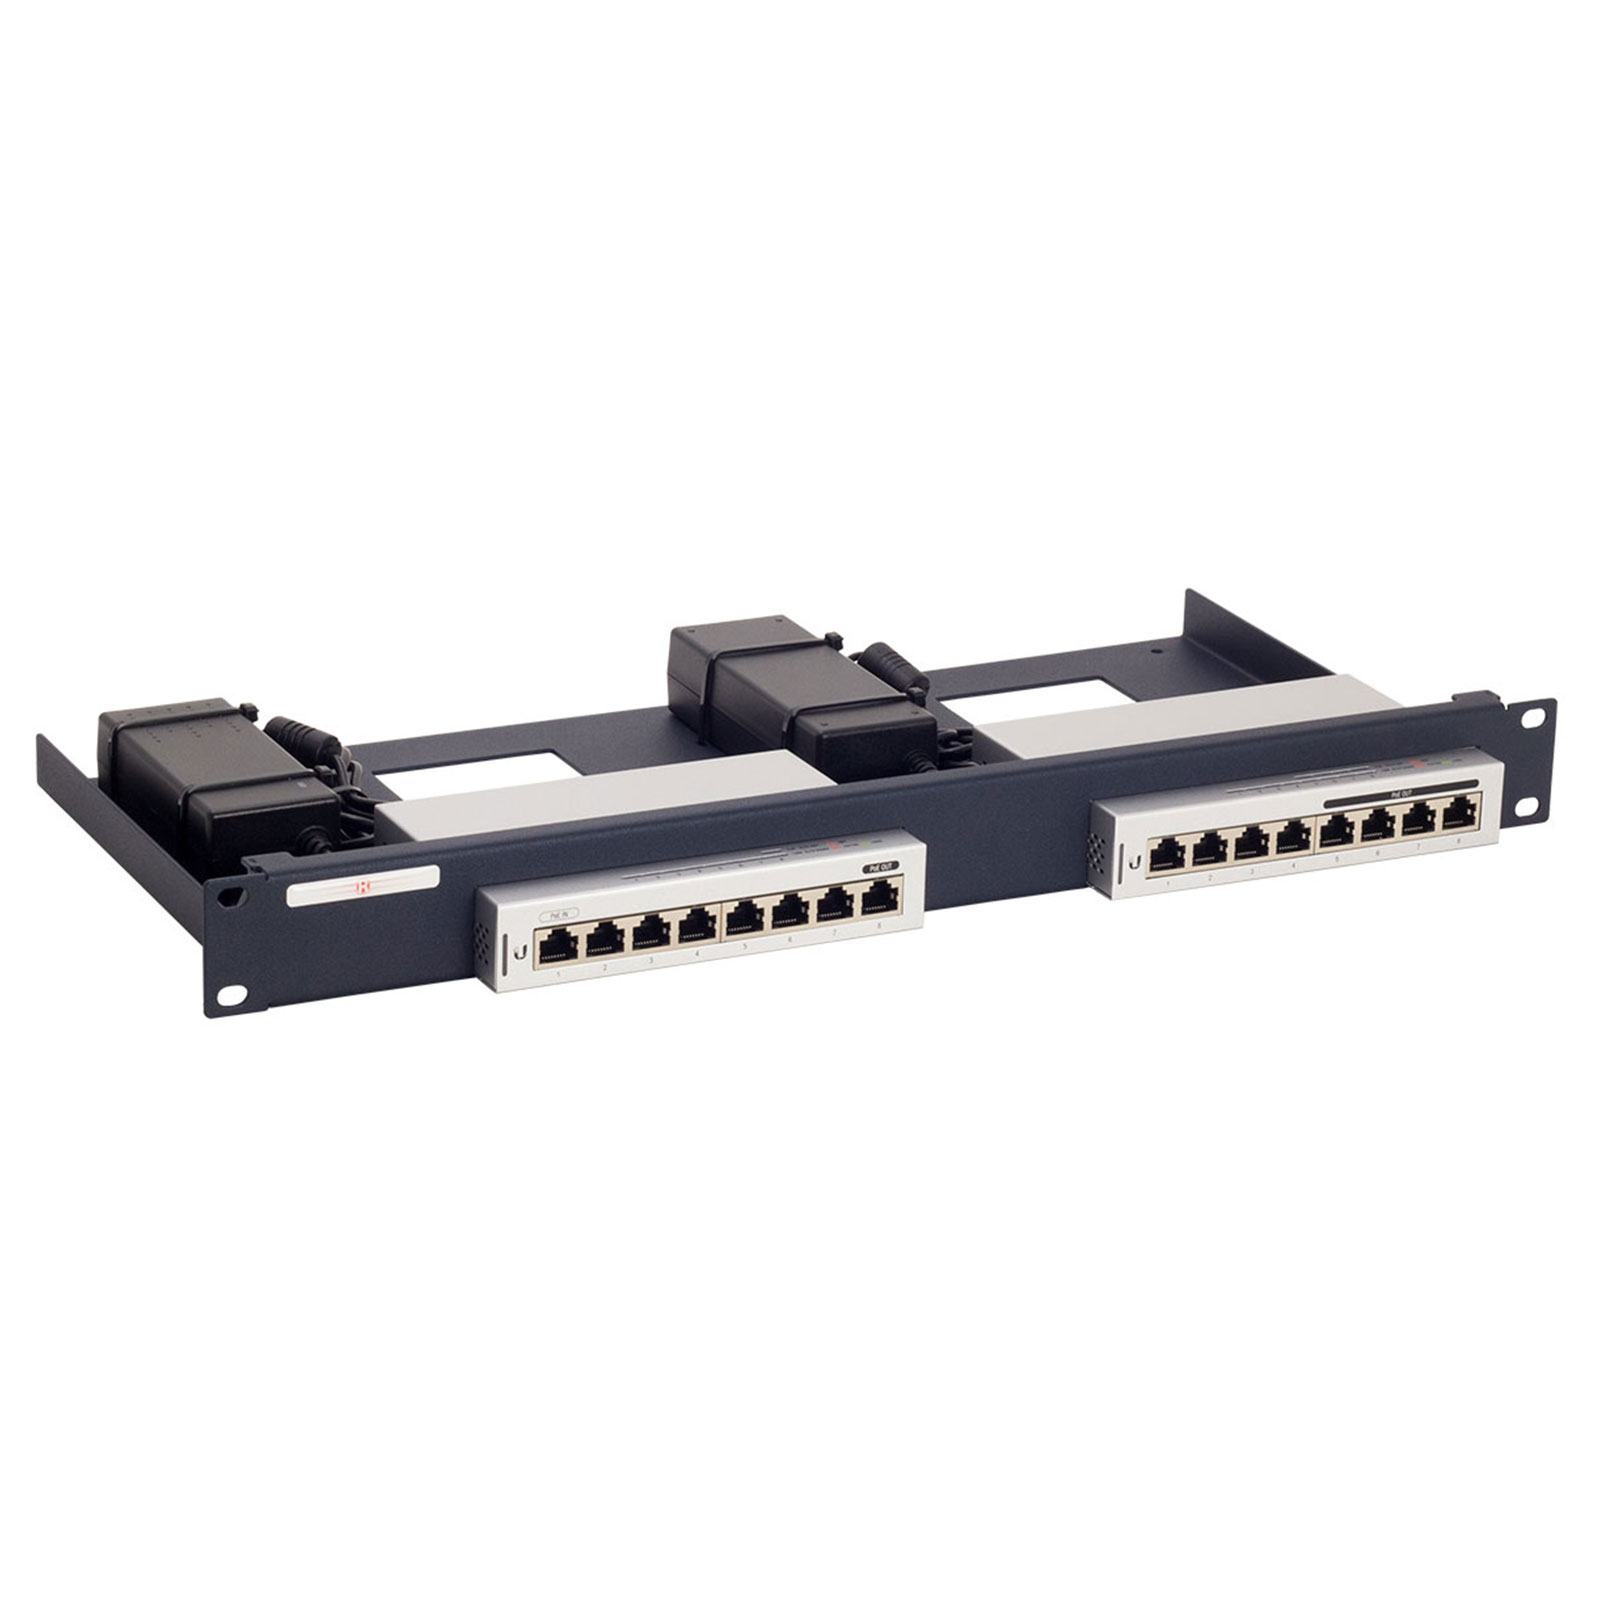 Rack Mount Kit For Ubiquity Unifi Switch 8 8 60w Rm Ub T1 Shop At Allfirewalls